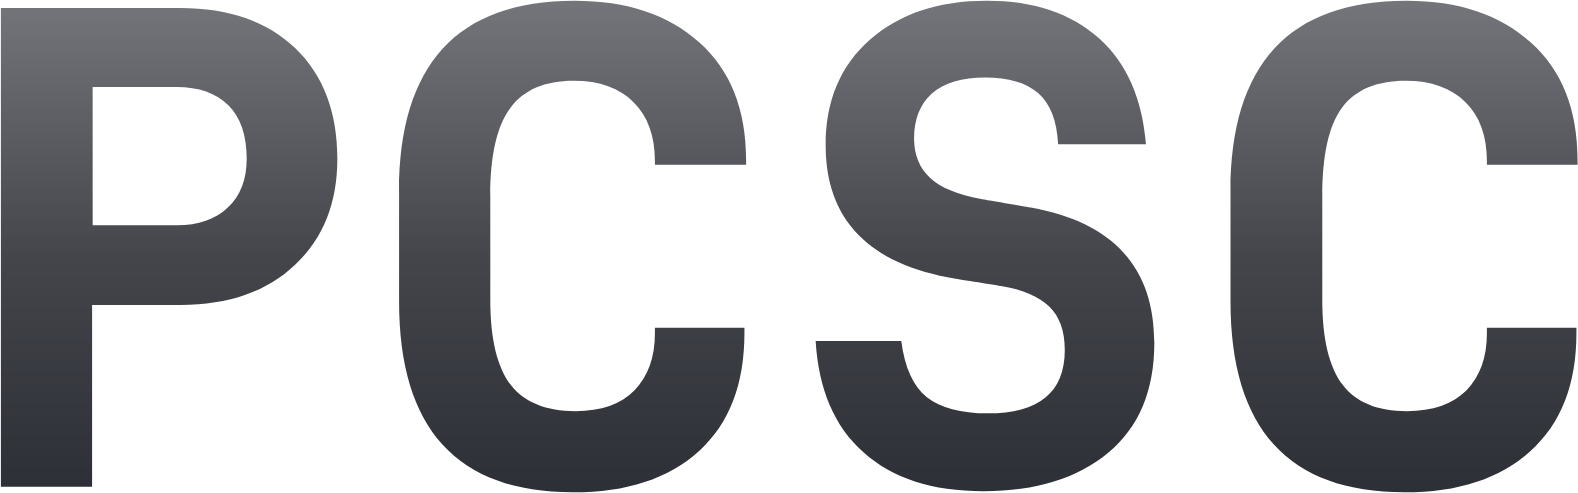 President Chain Store (PSCS) Logo (transparentes PNG)